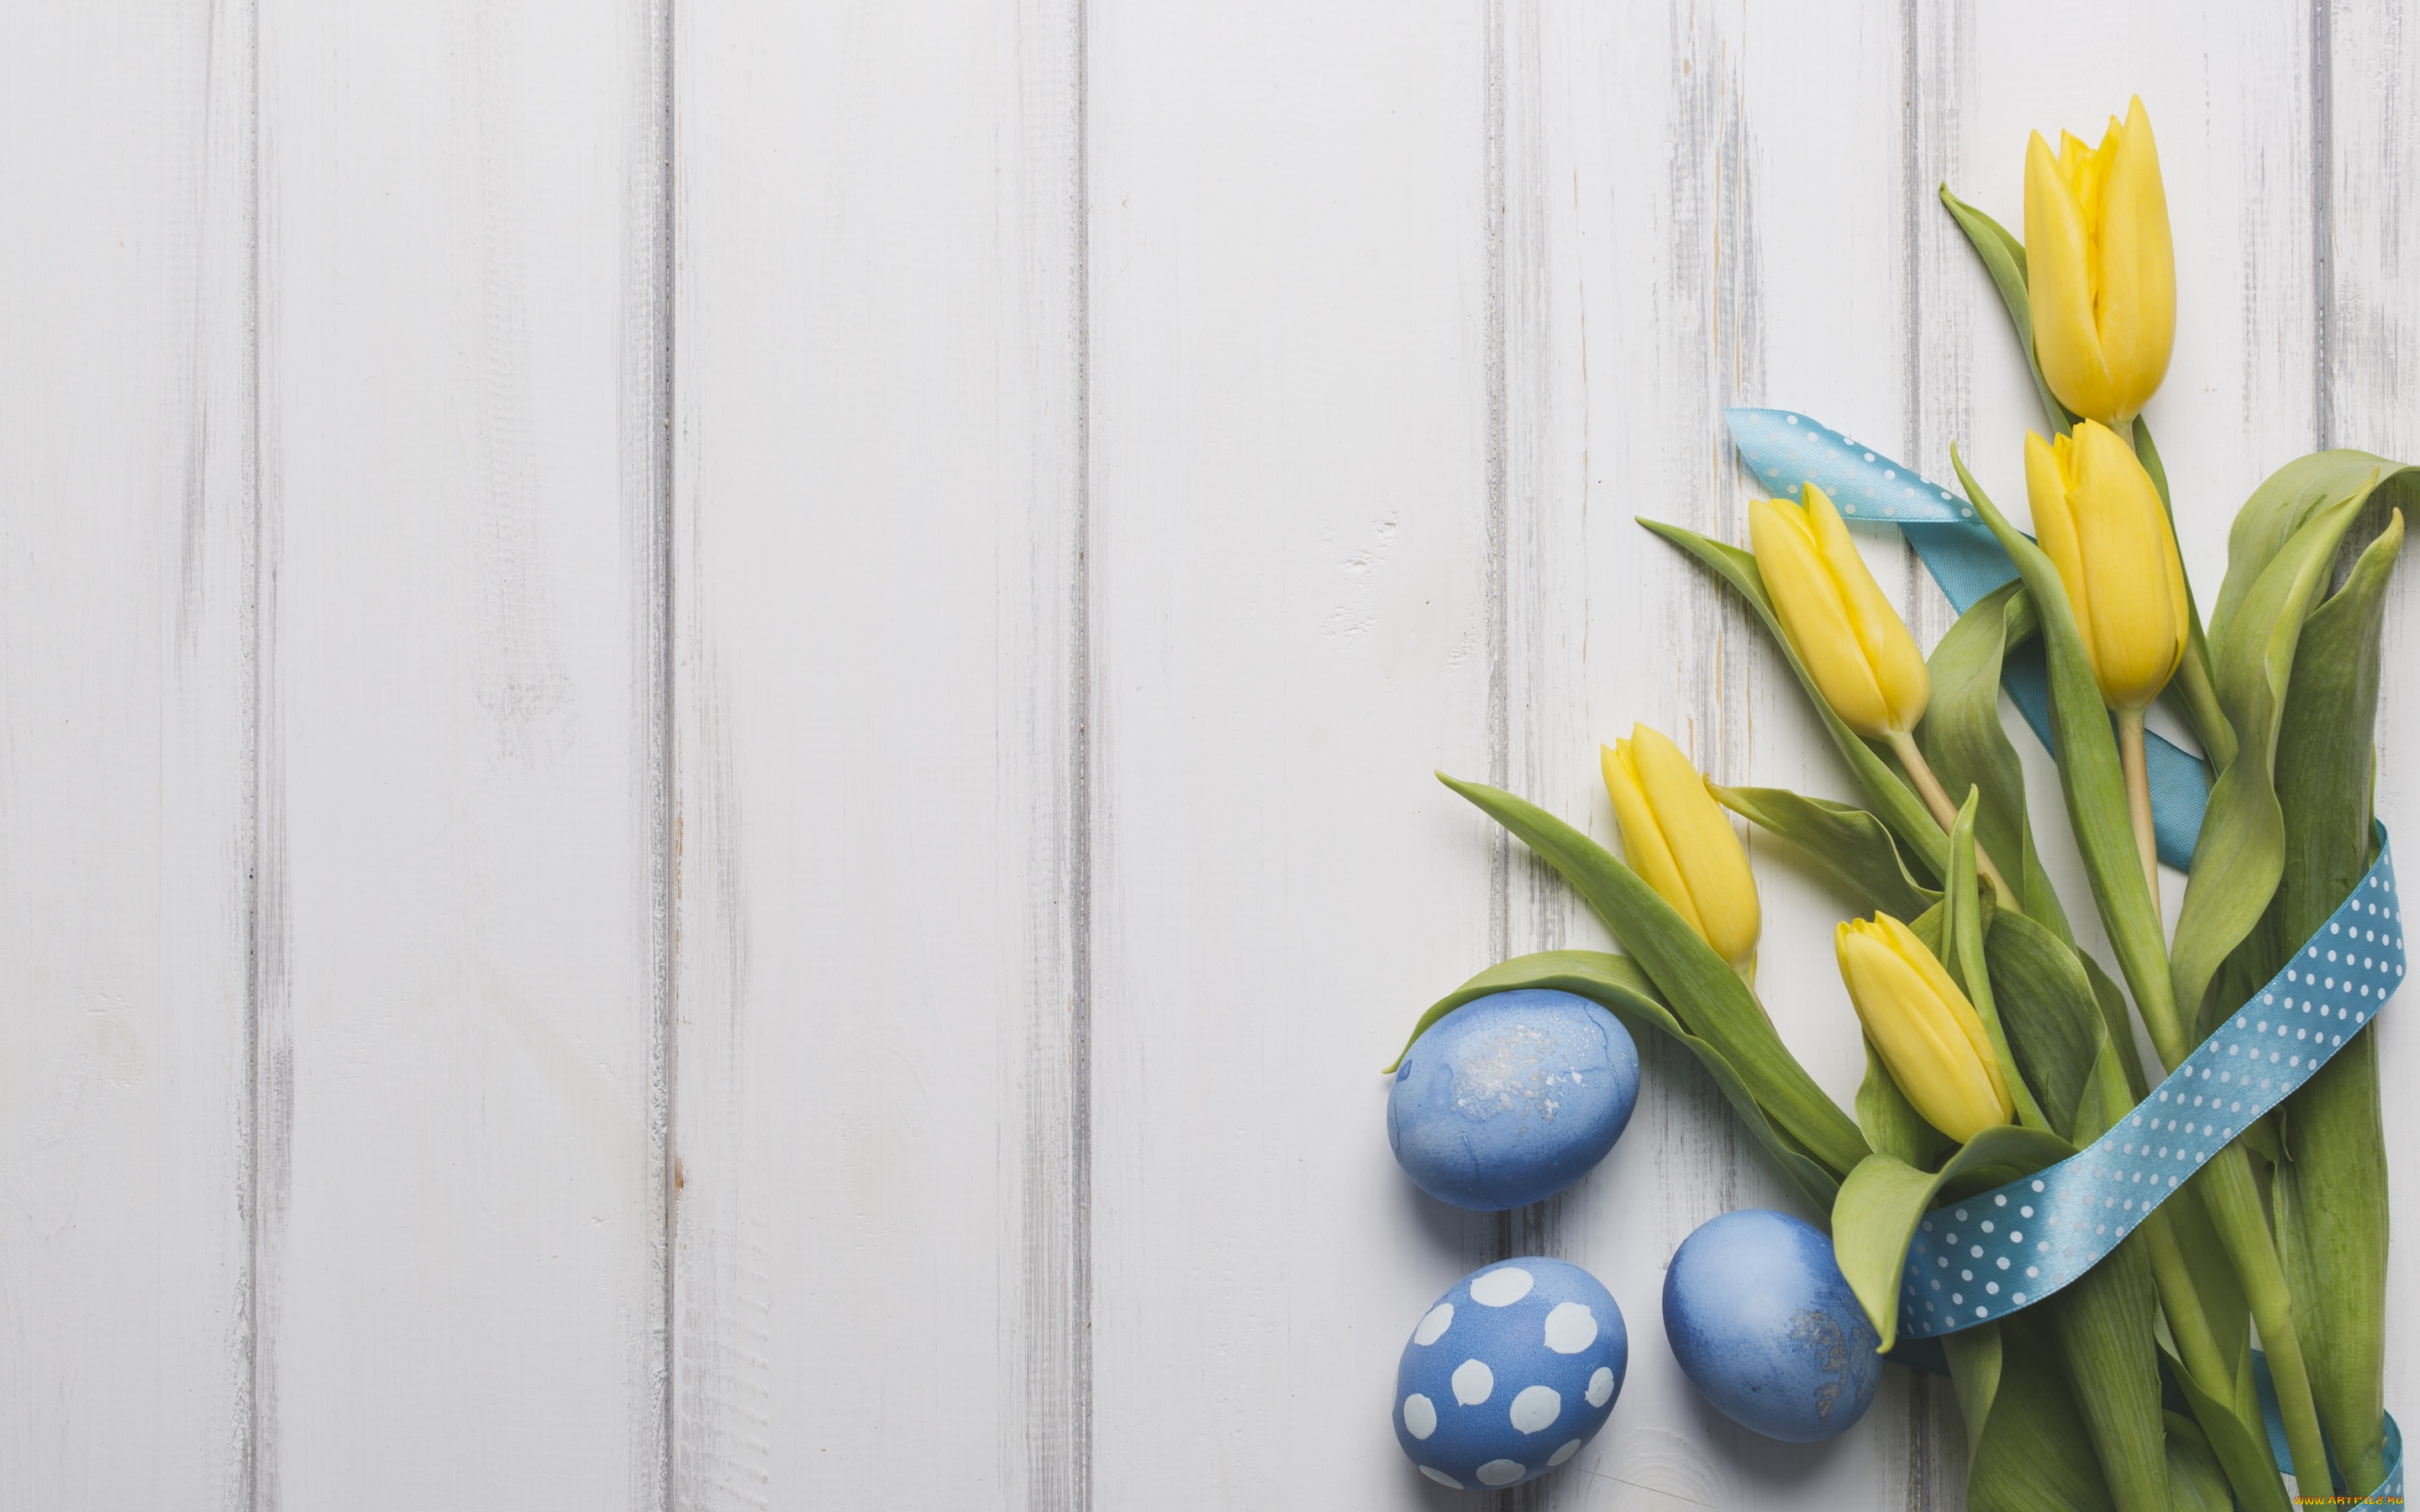 праздничные, пасха, eggs, праздник, tulips, букет, лента, blue, тюльпаны, весна, декор, wood, easter